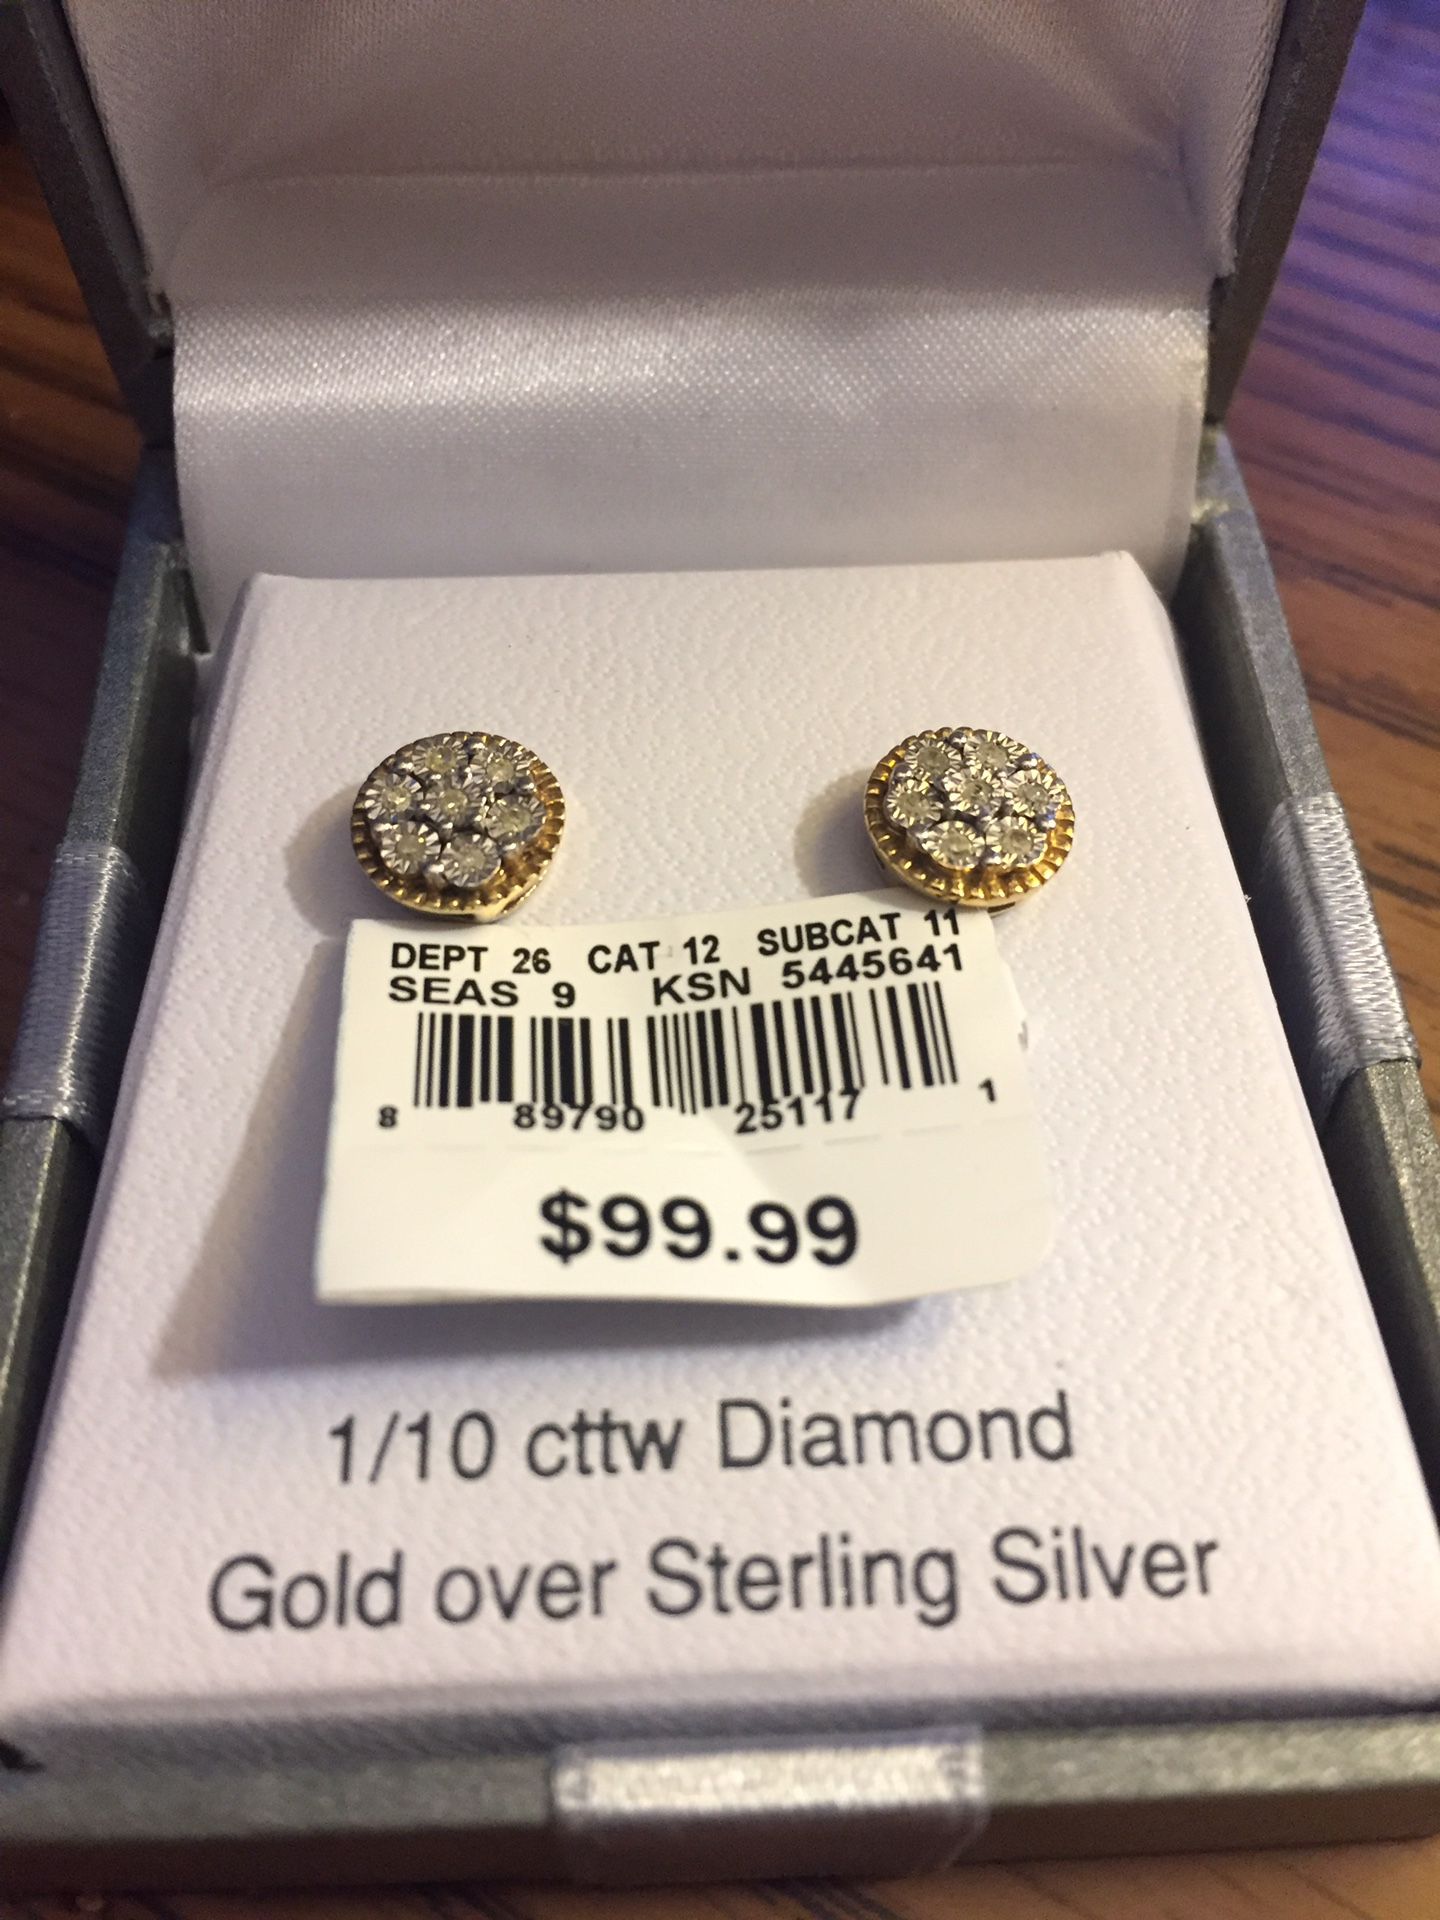 Men’s 1/10 cttw diamond earrings